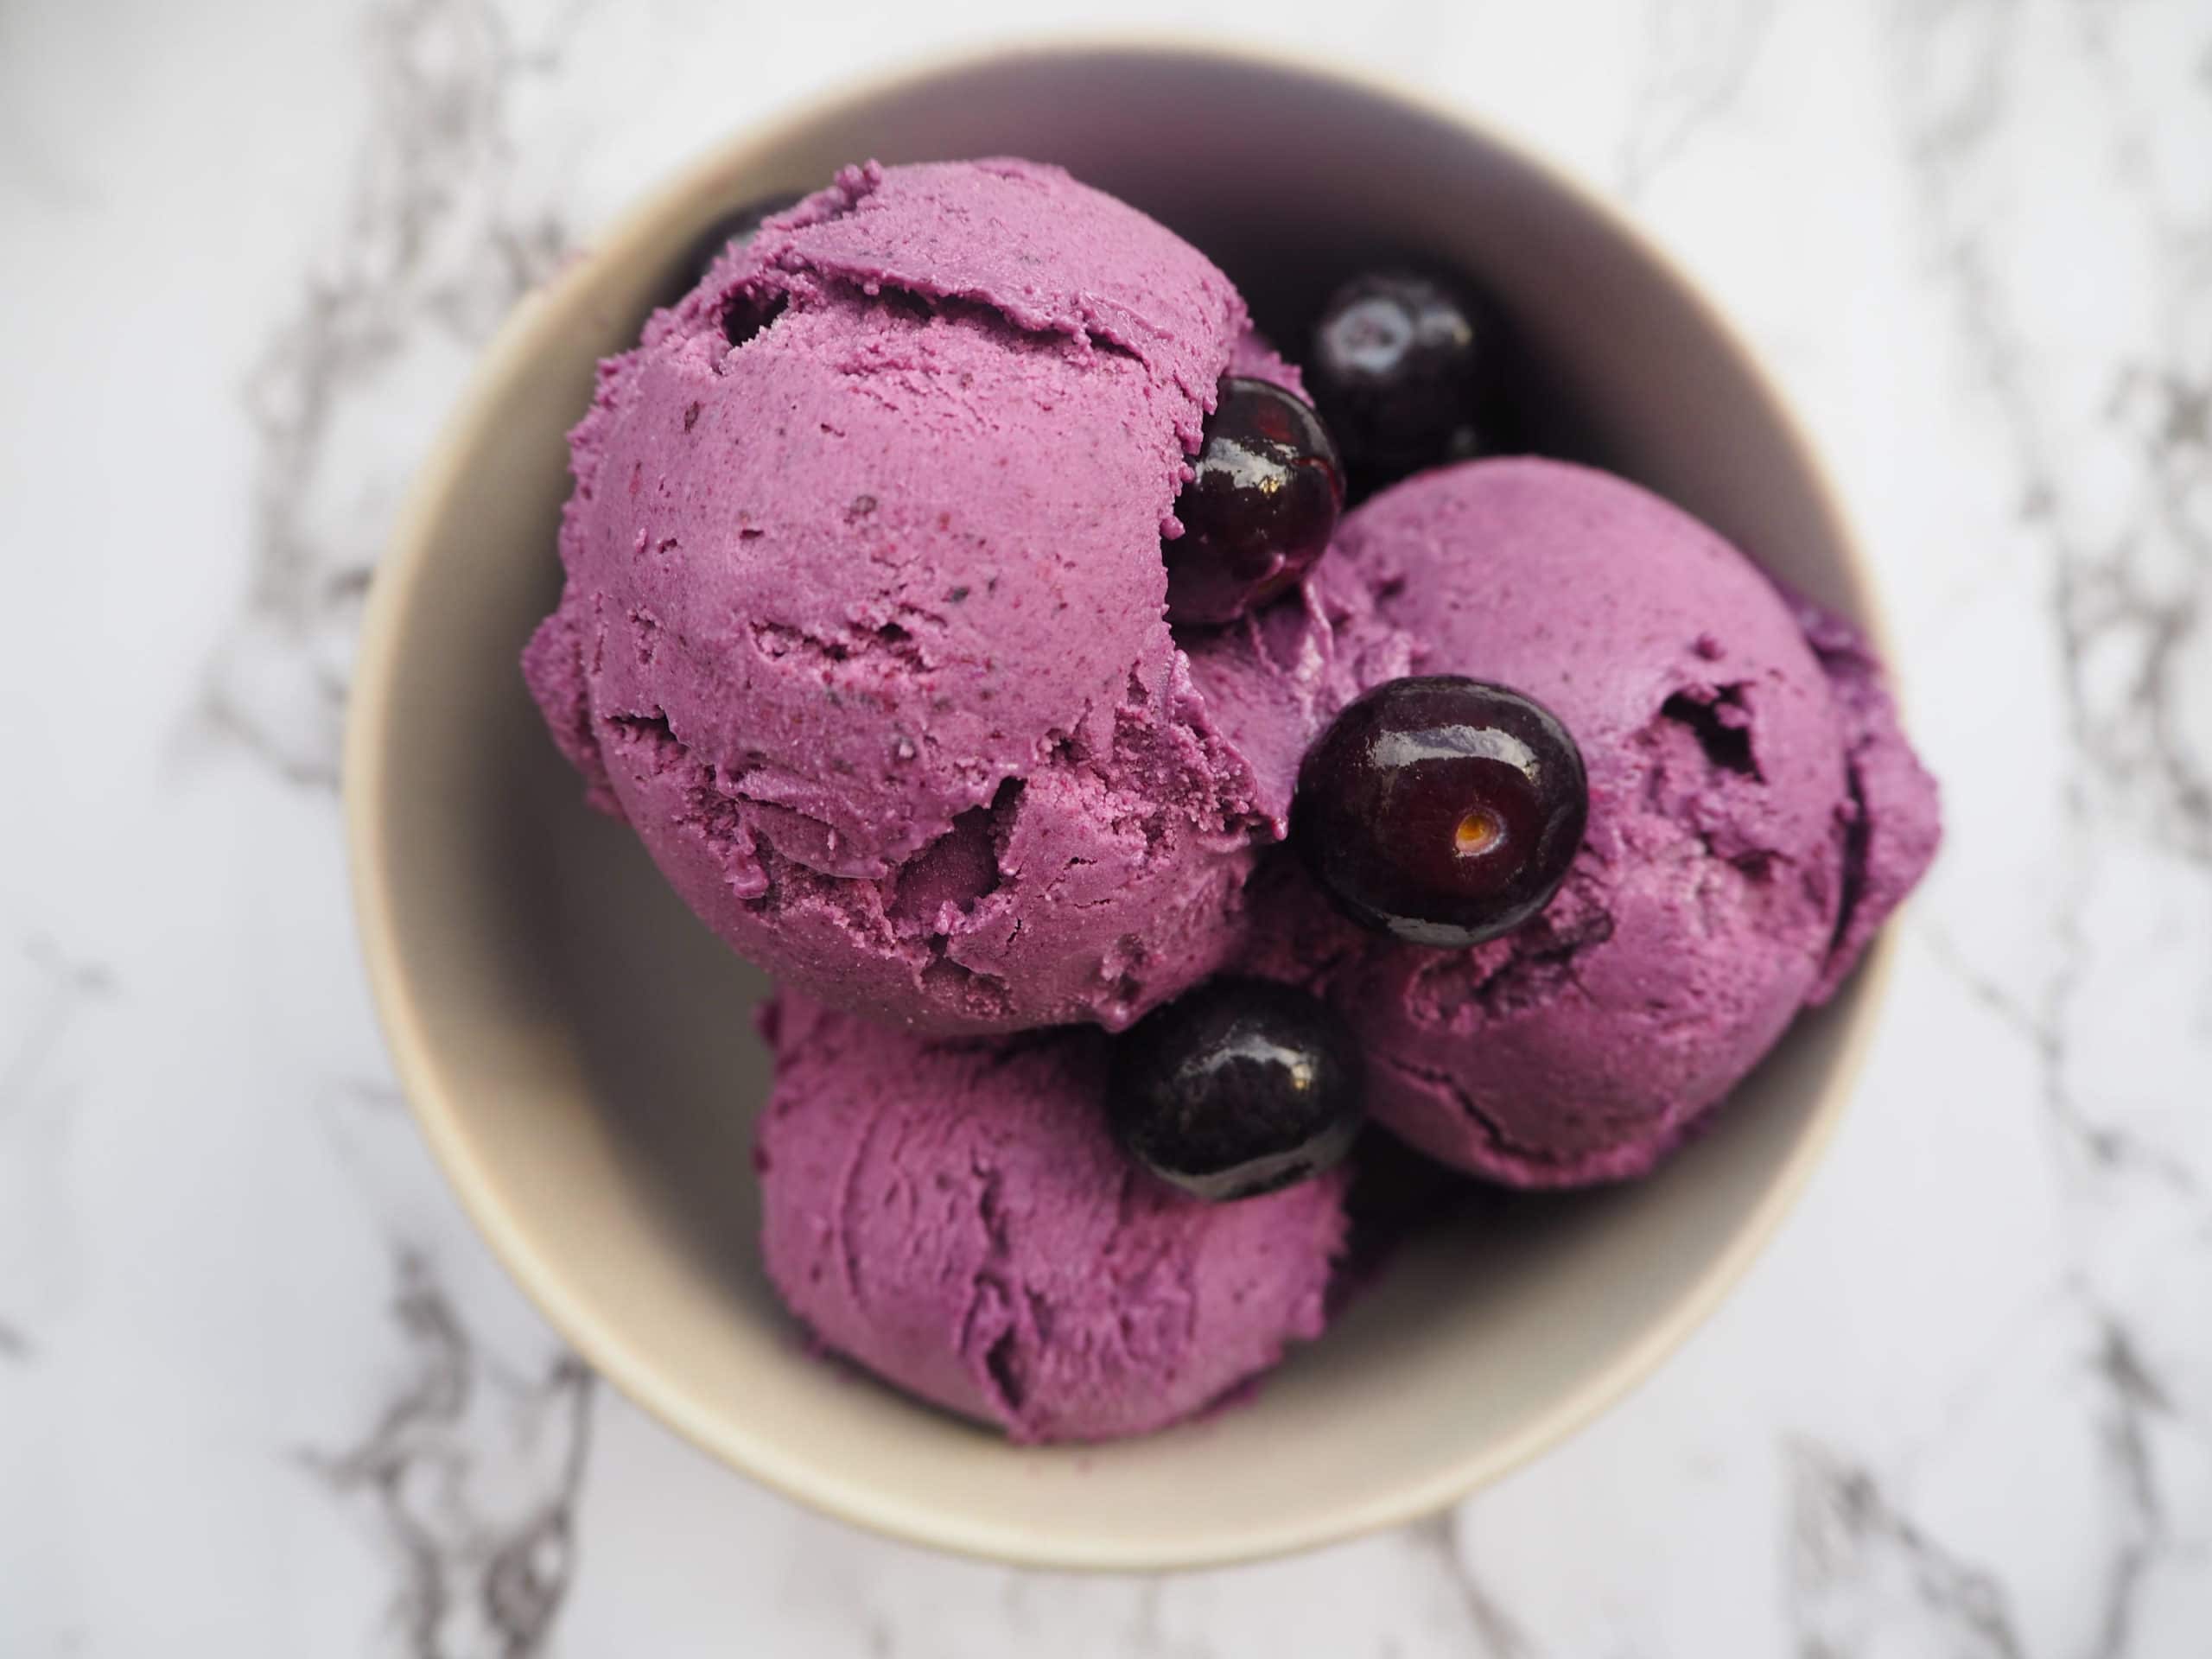 Blueberry cashew ice cream